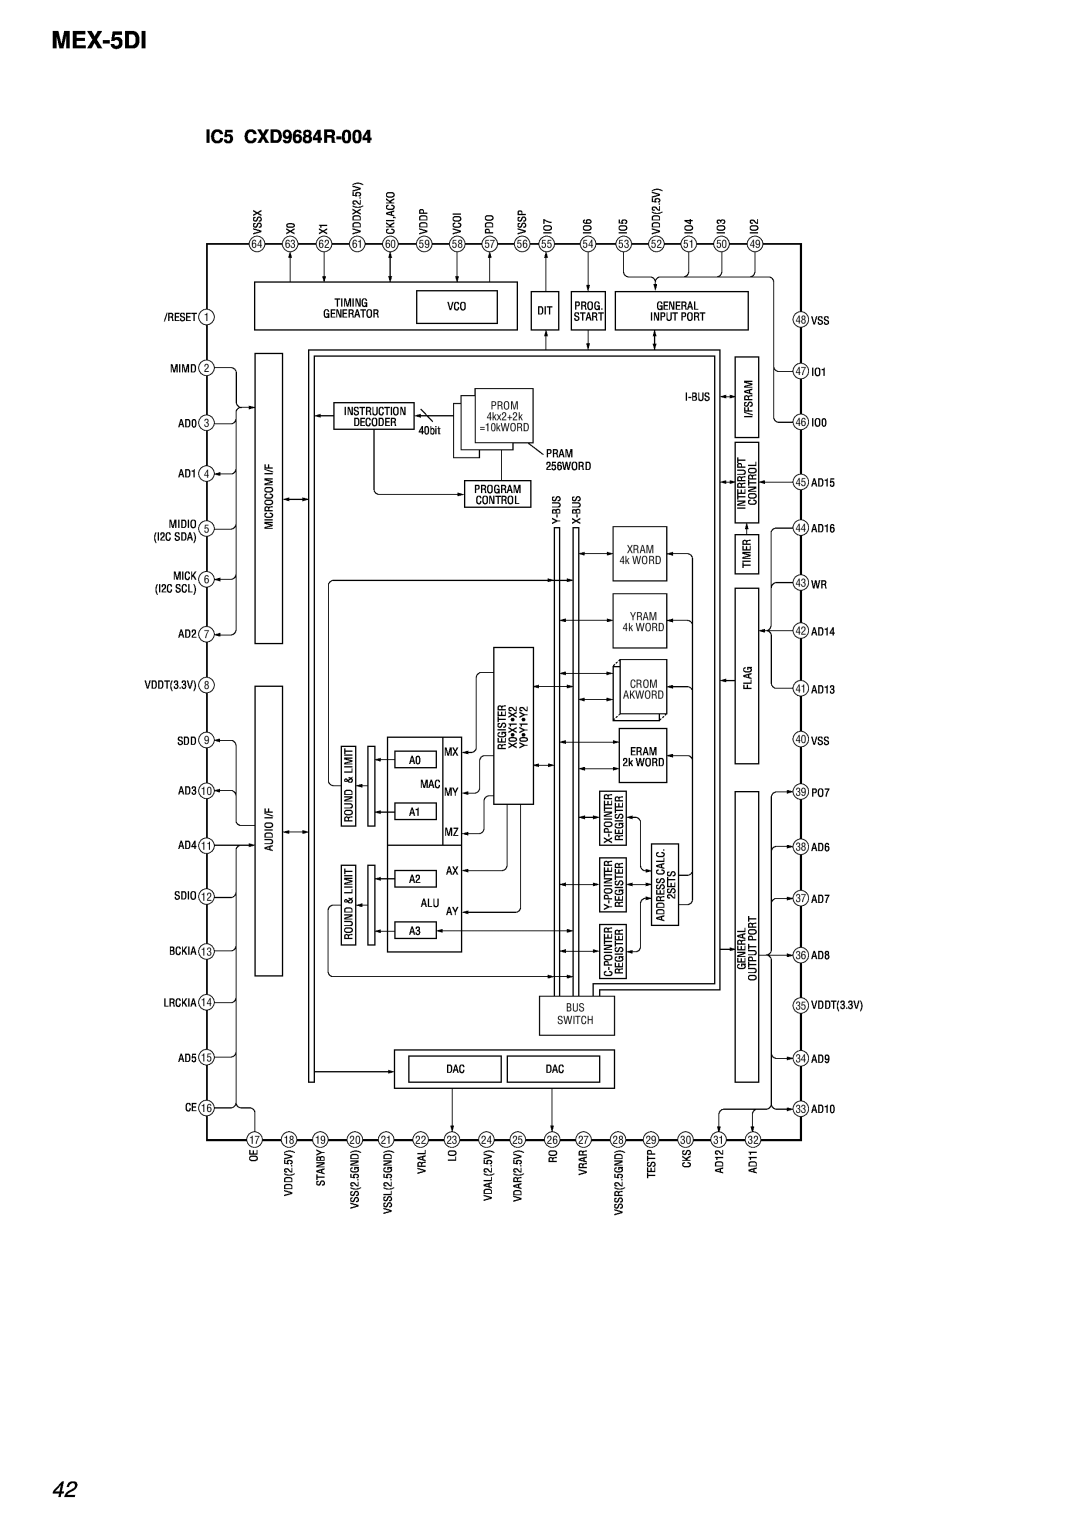 Sony MEX-5DI service manual IC5 CXD9684R-004 